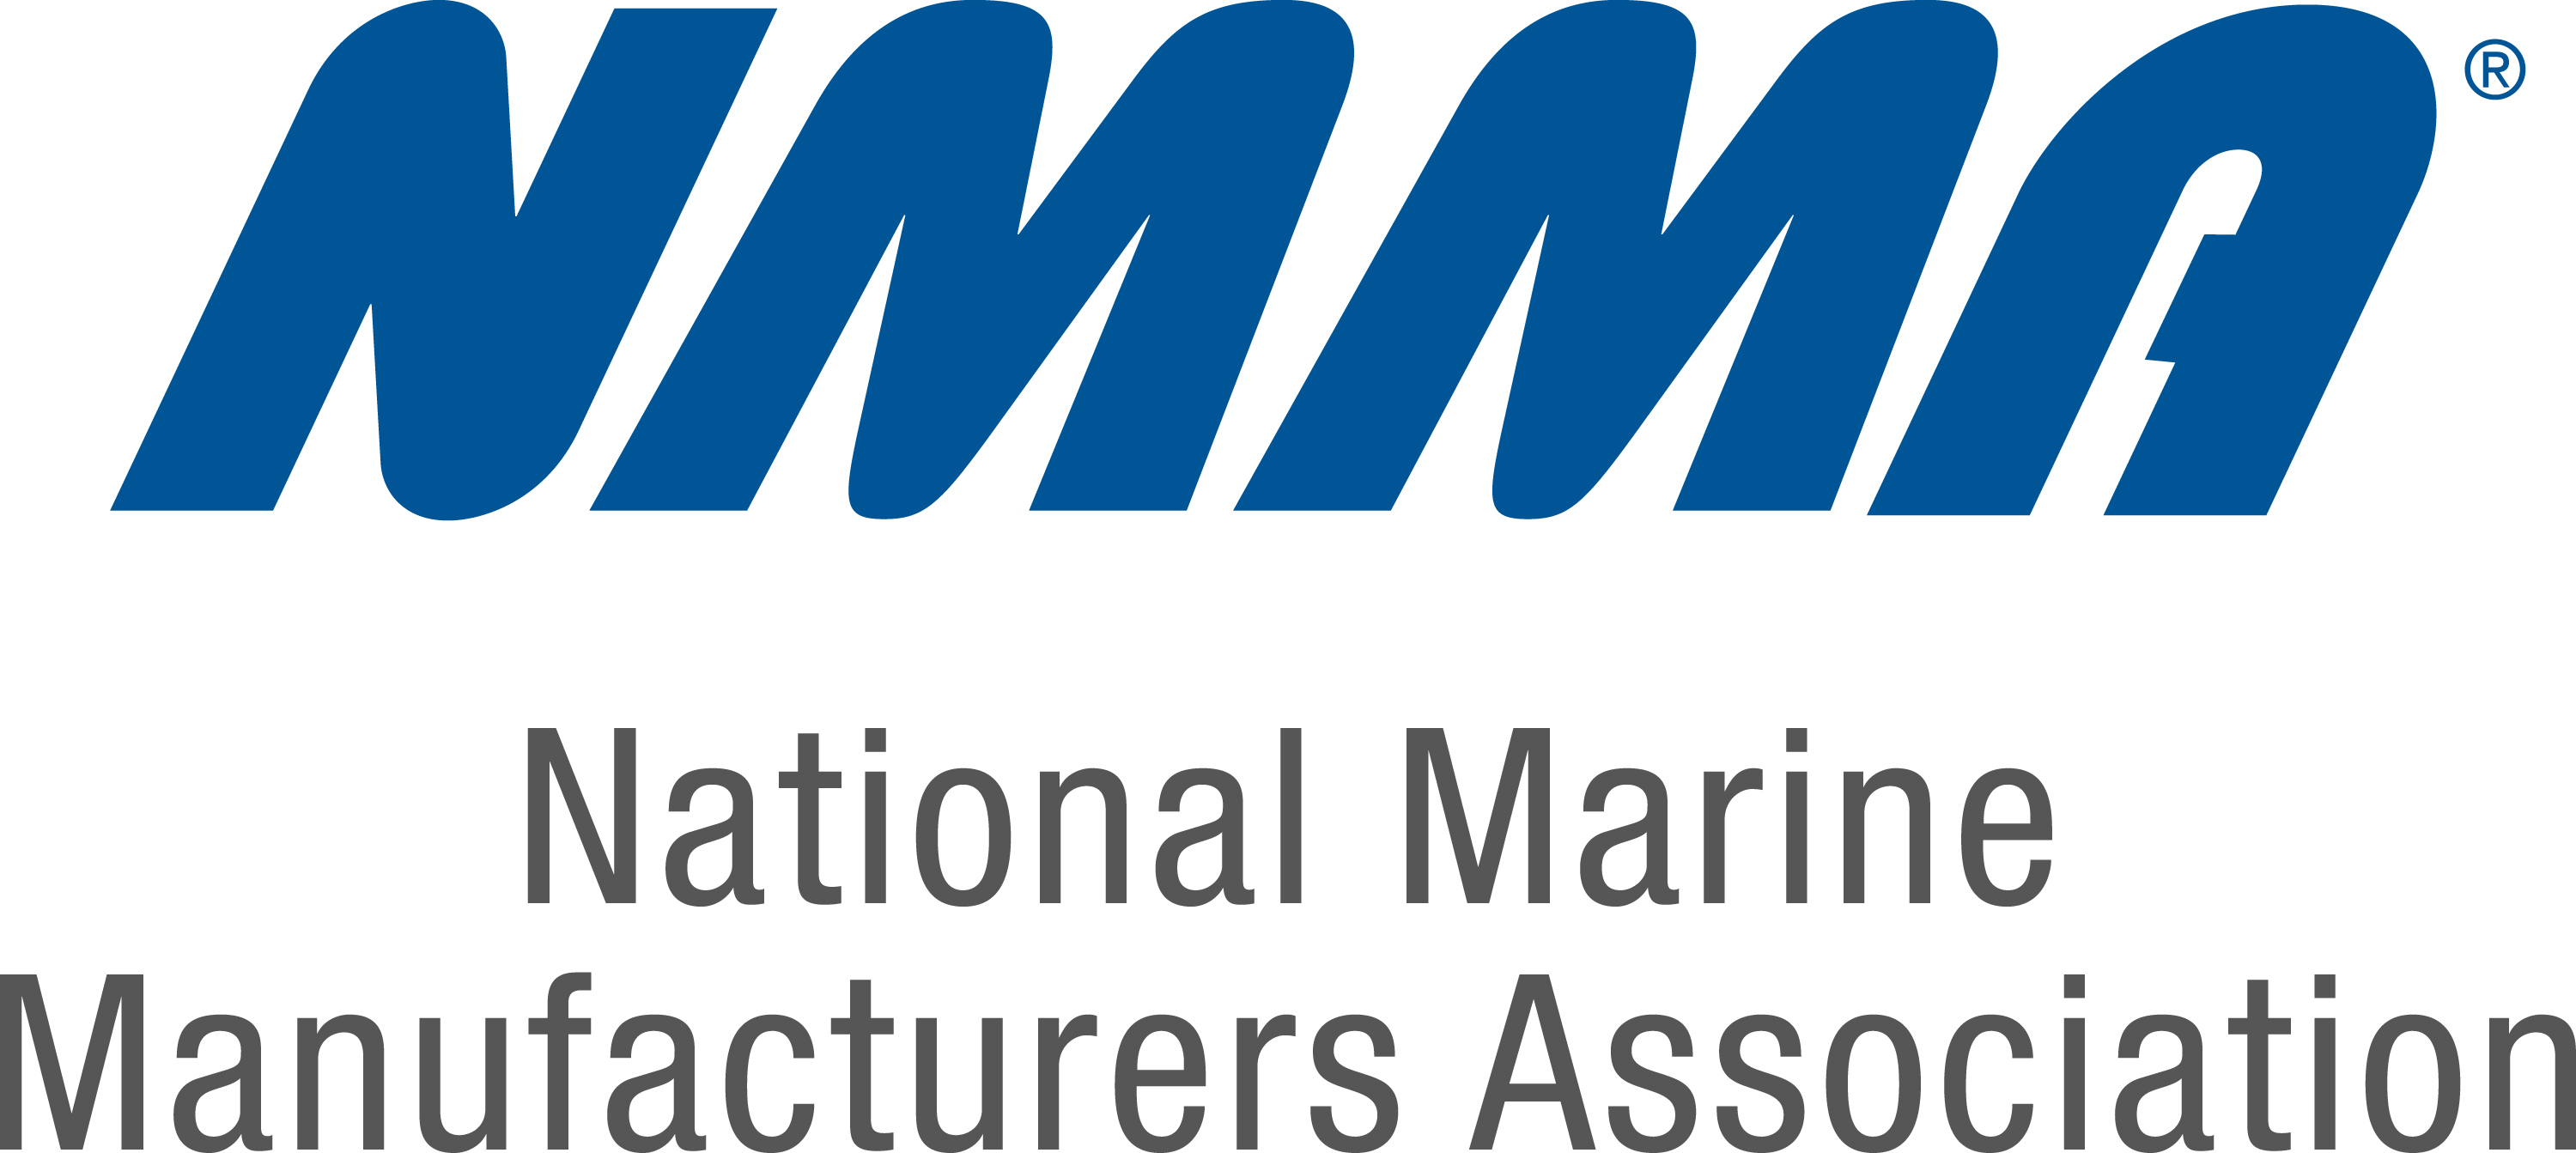 National Marine Manufacturer's Association